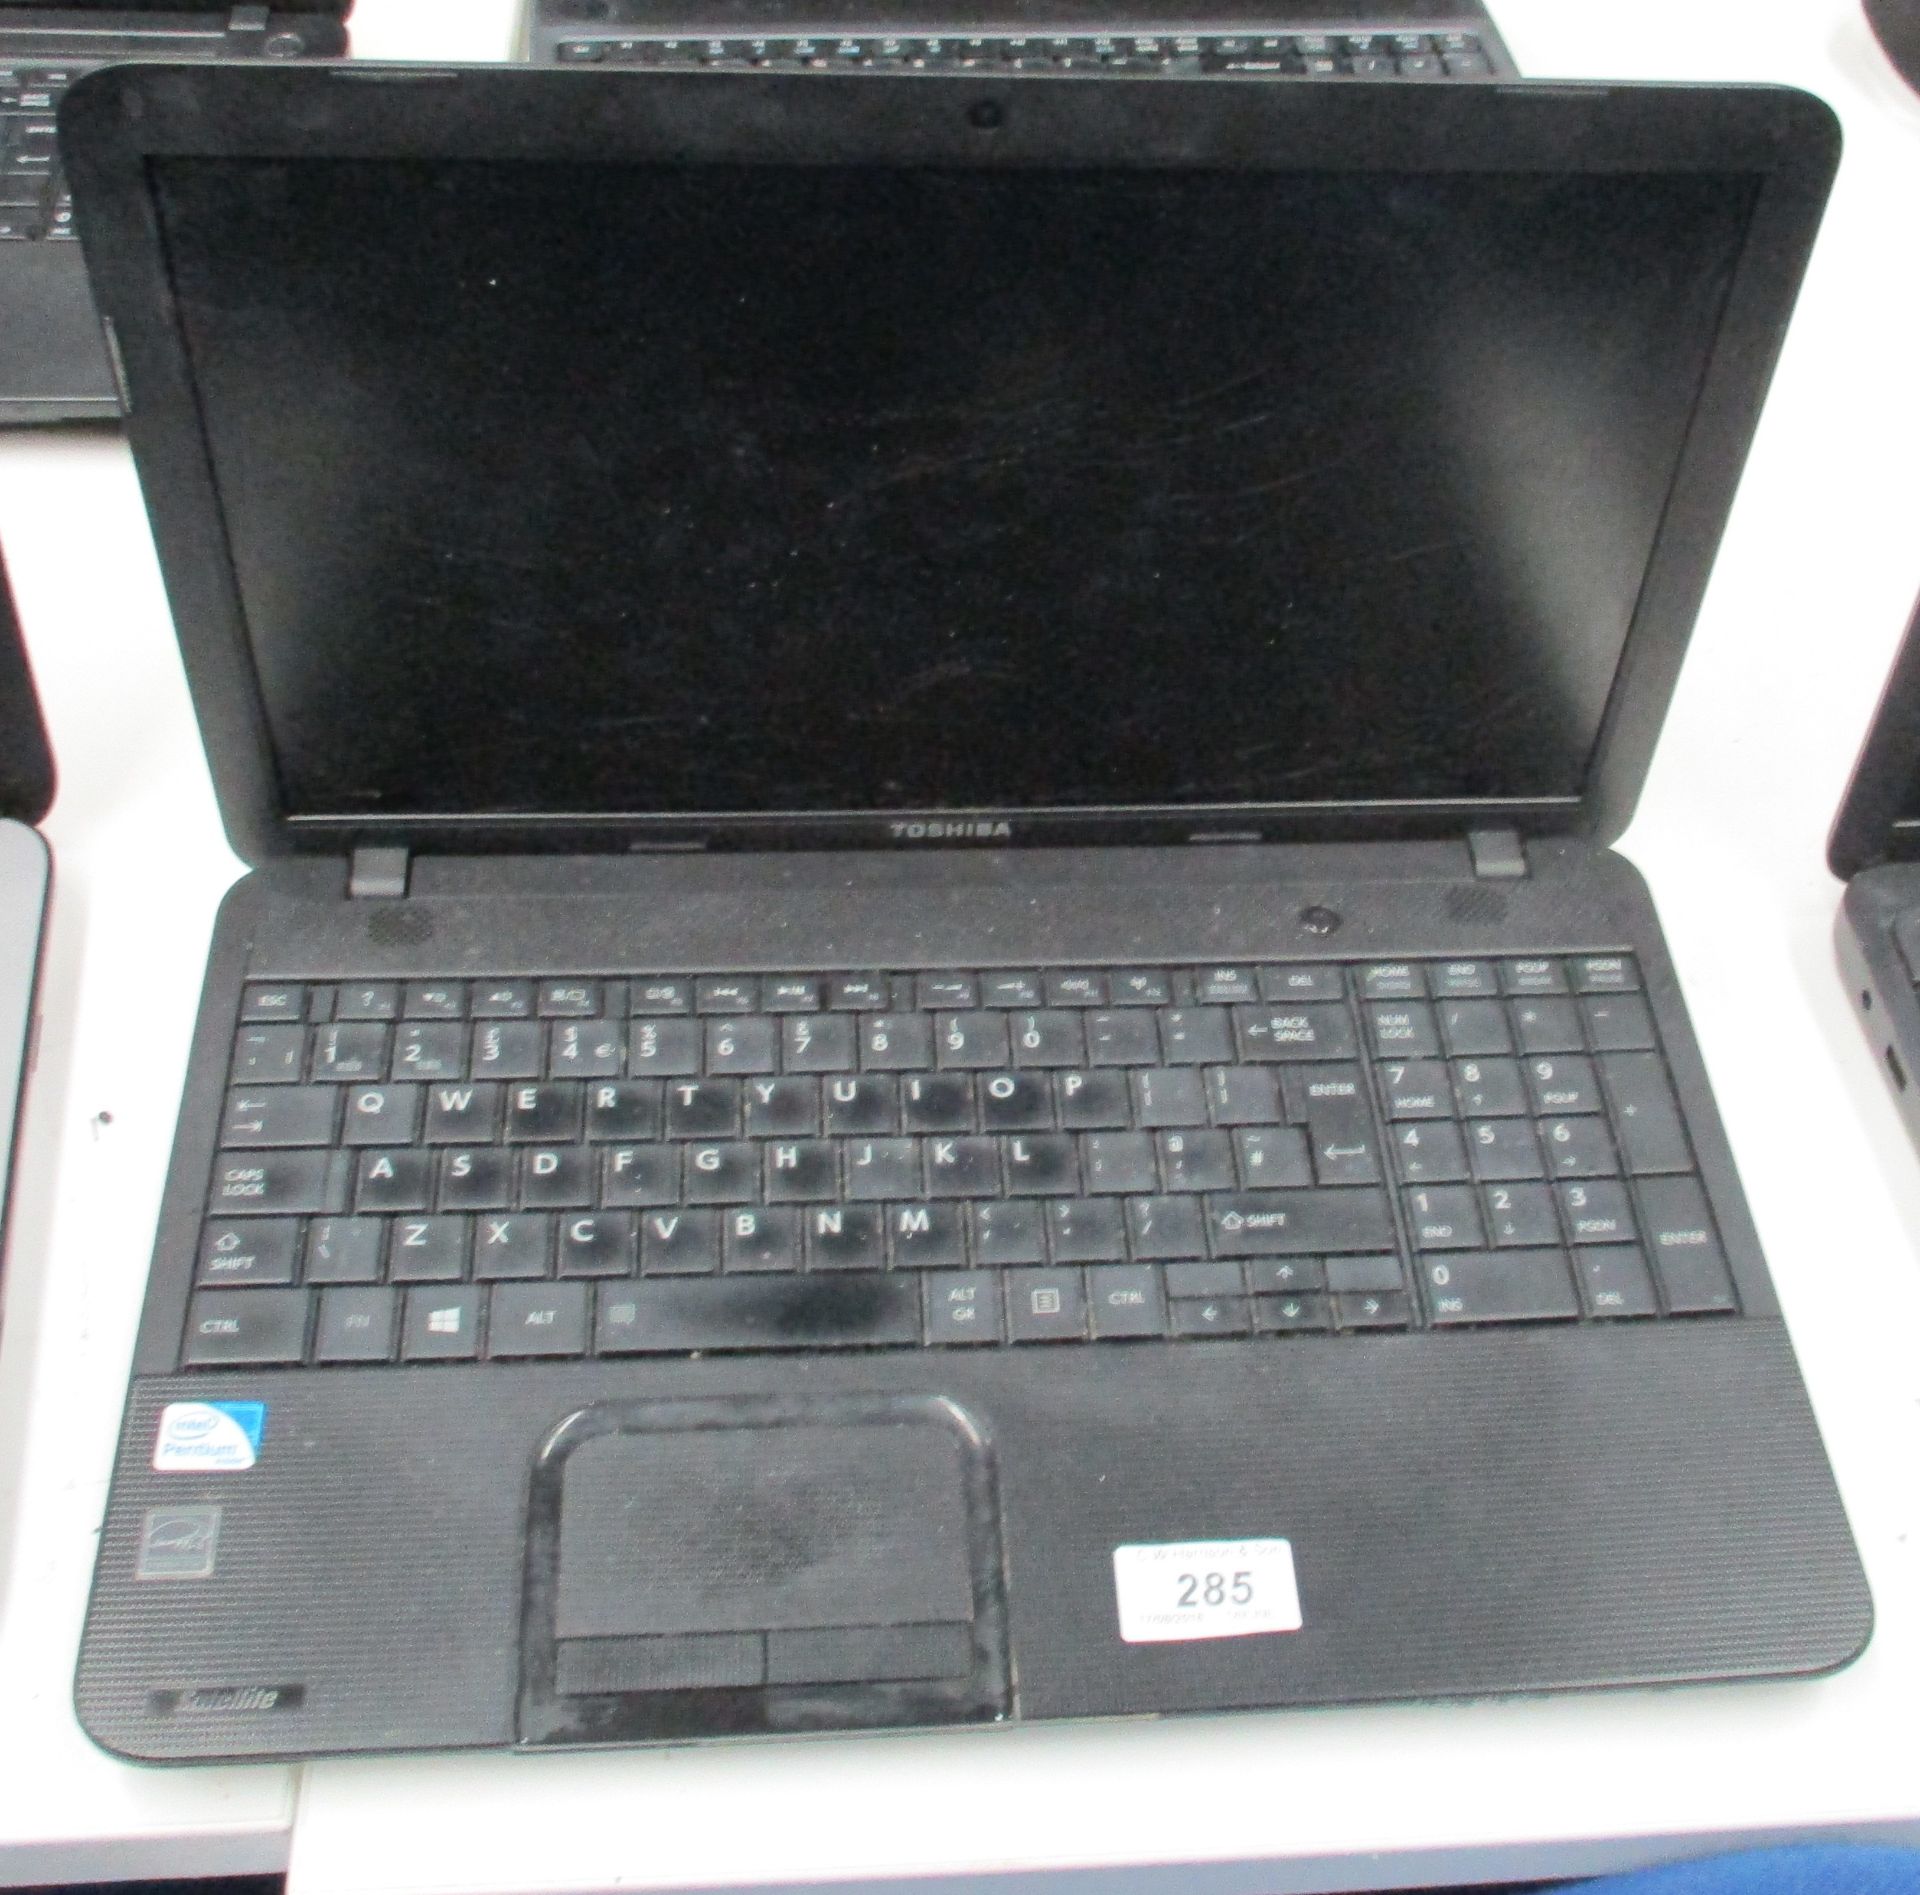 A Toshiba Satellite C850 laptop computer - no power lead